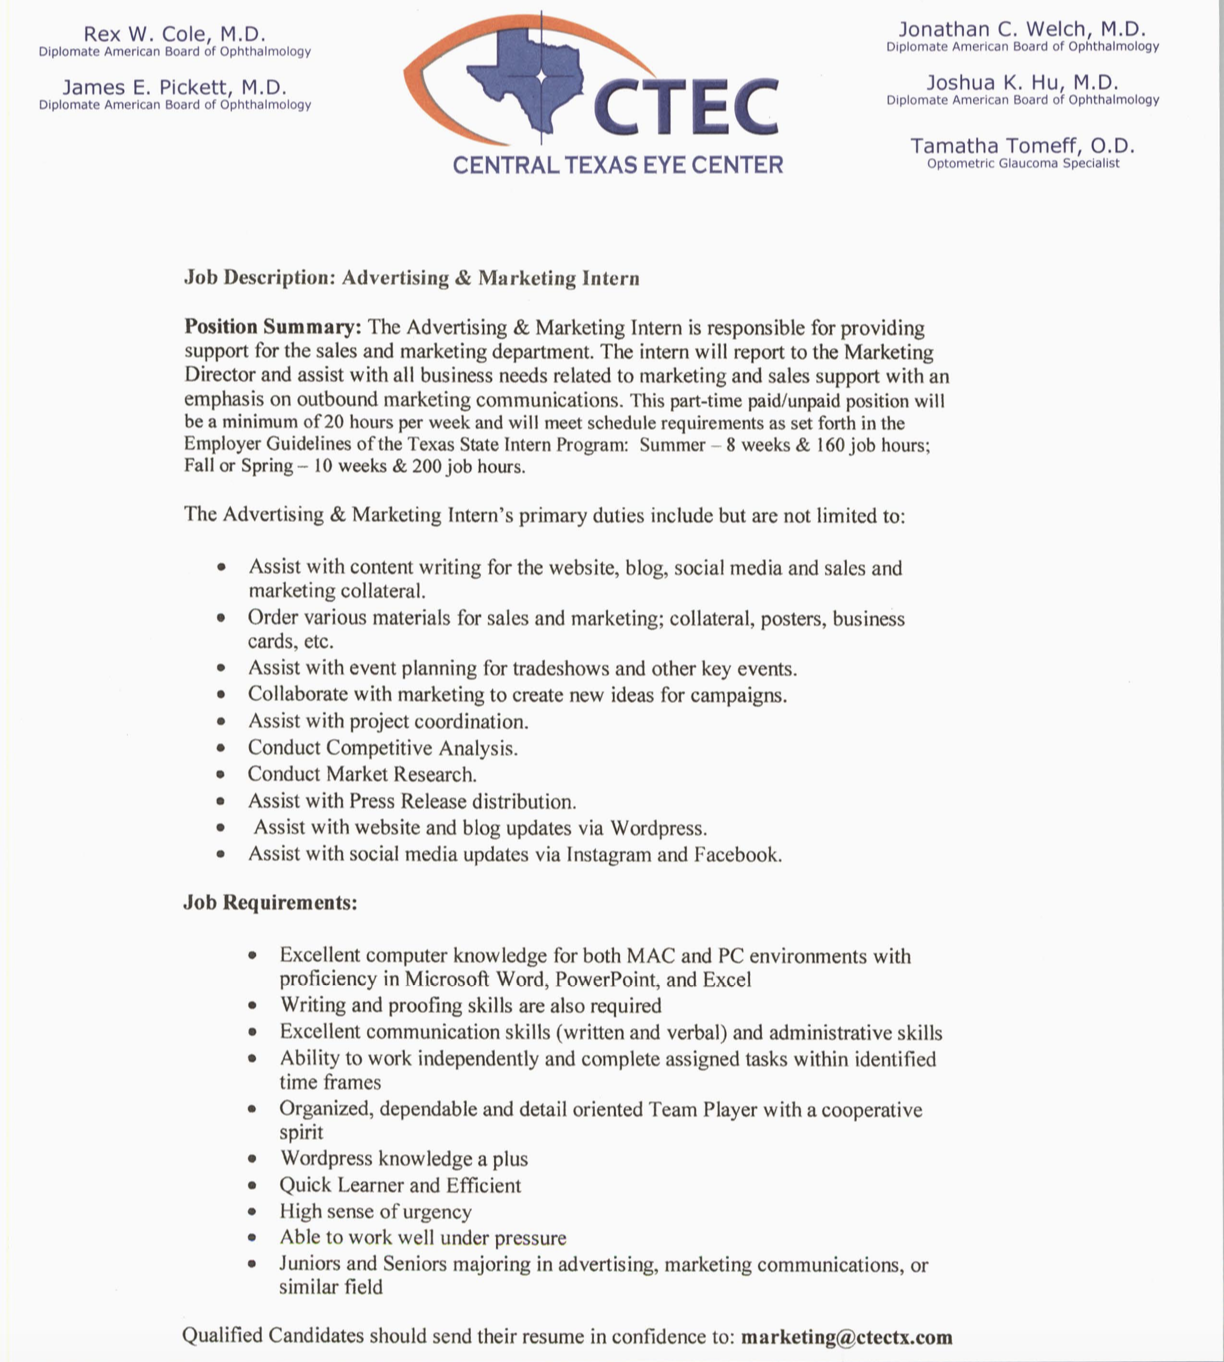 Central Texas Eye Center Internship Qualifications